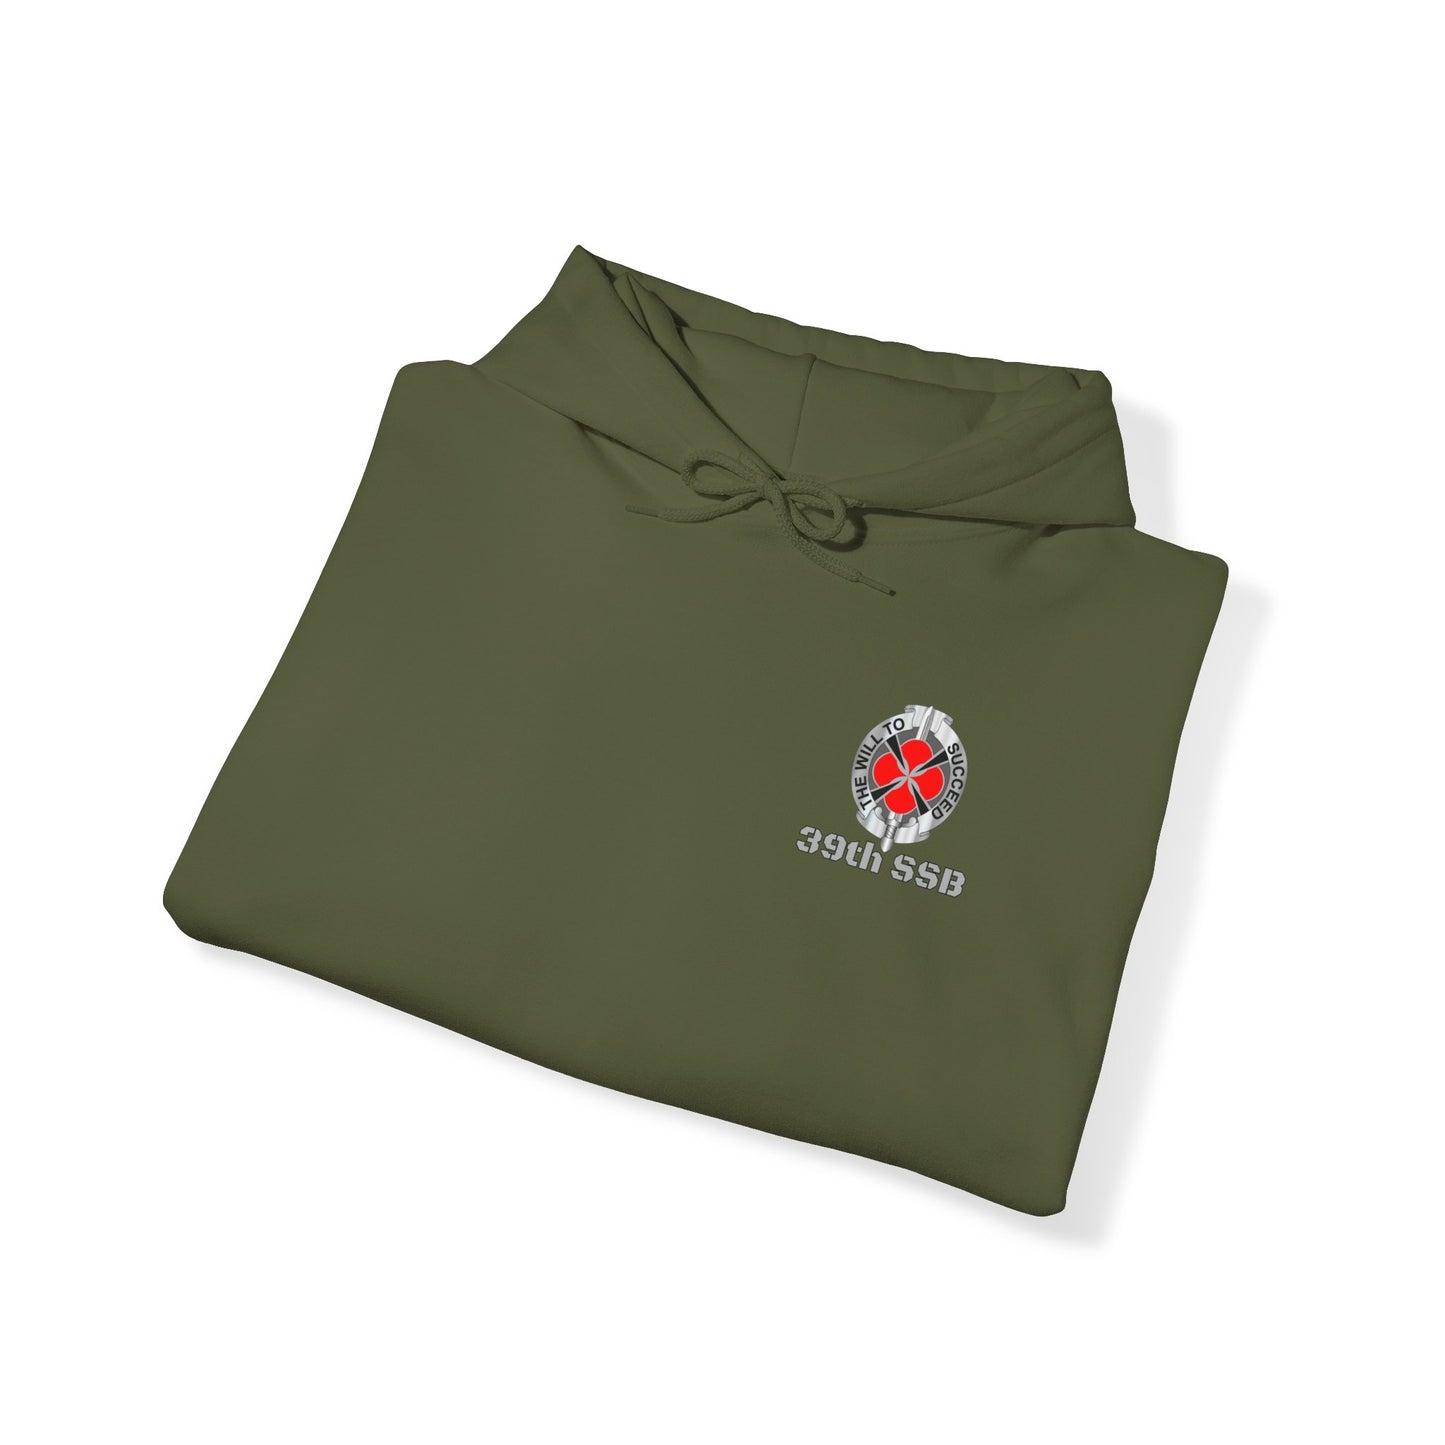 39th SSB - Flags on Sleeves - Unisex Heavy Blend™ Hooded Sweatshirt